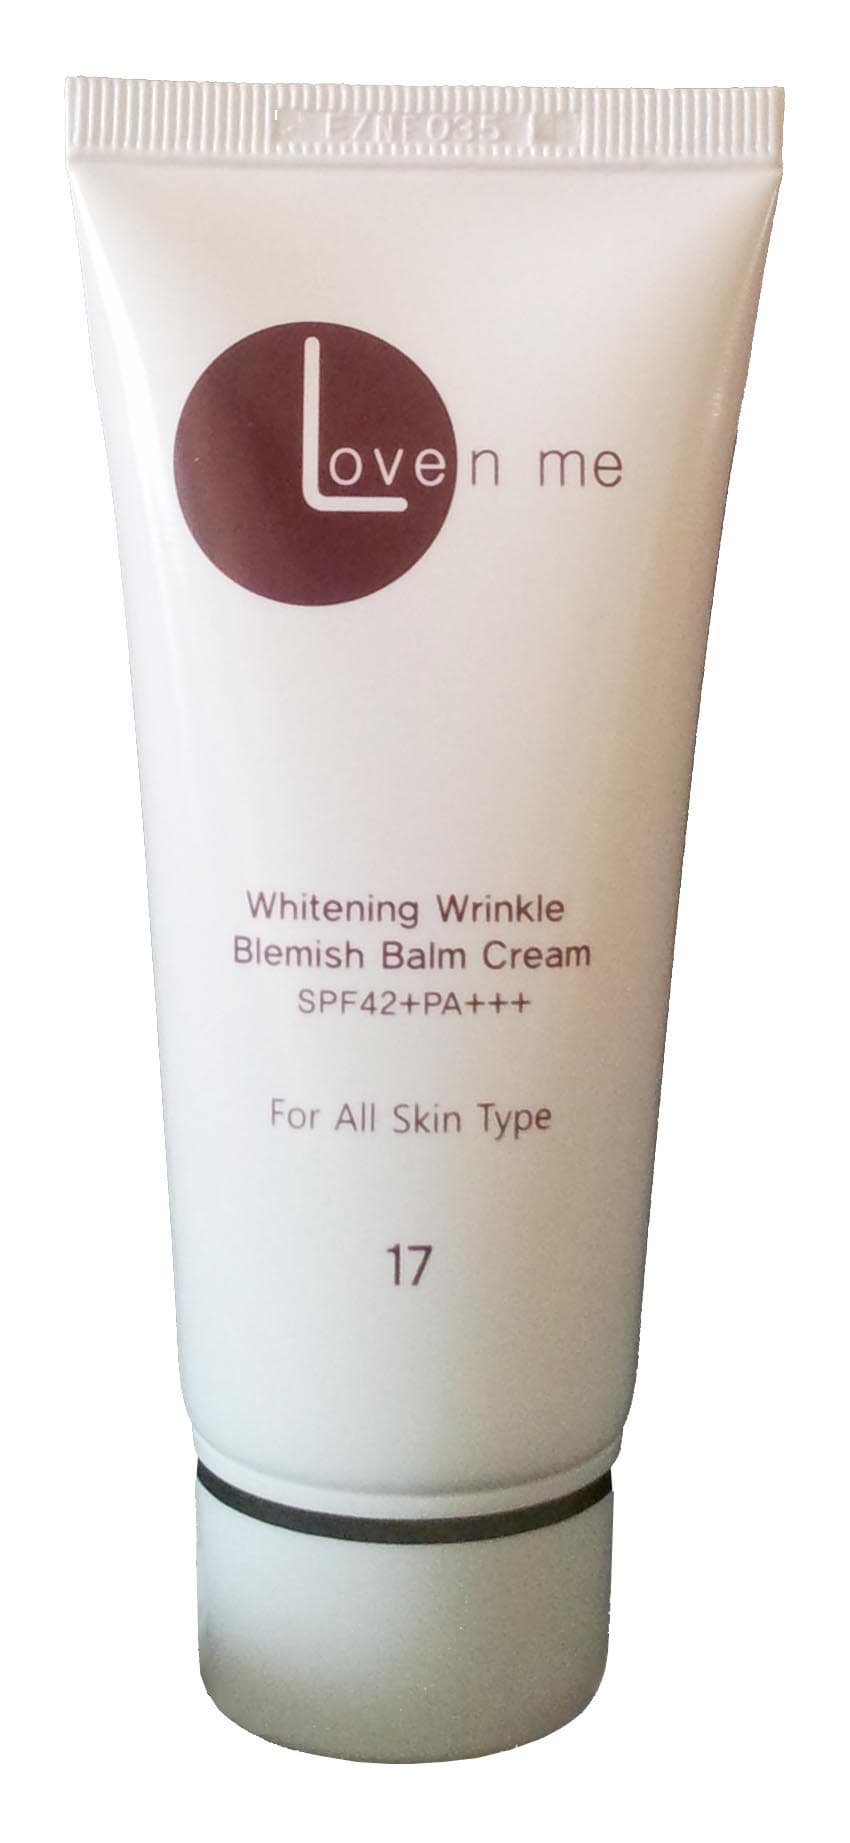 Whitening Wrinkle Blemish Balm Cream